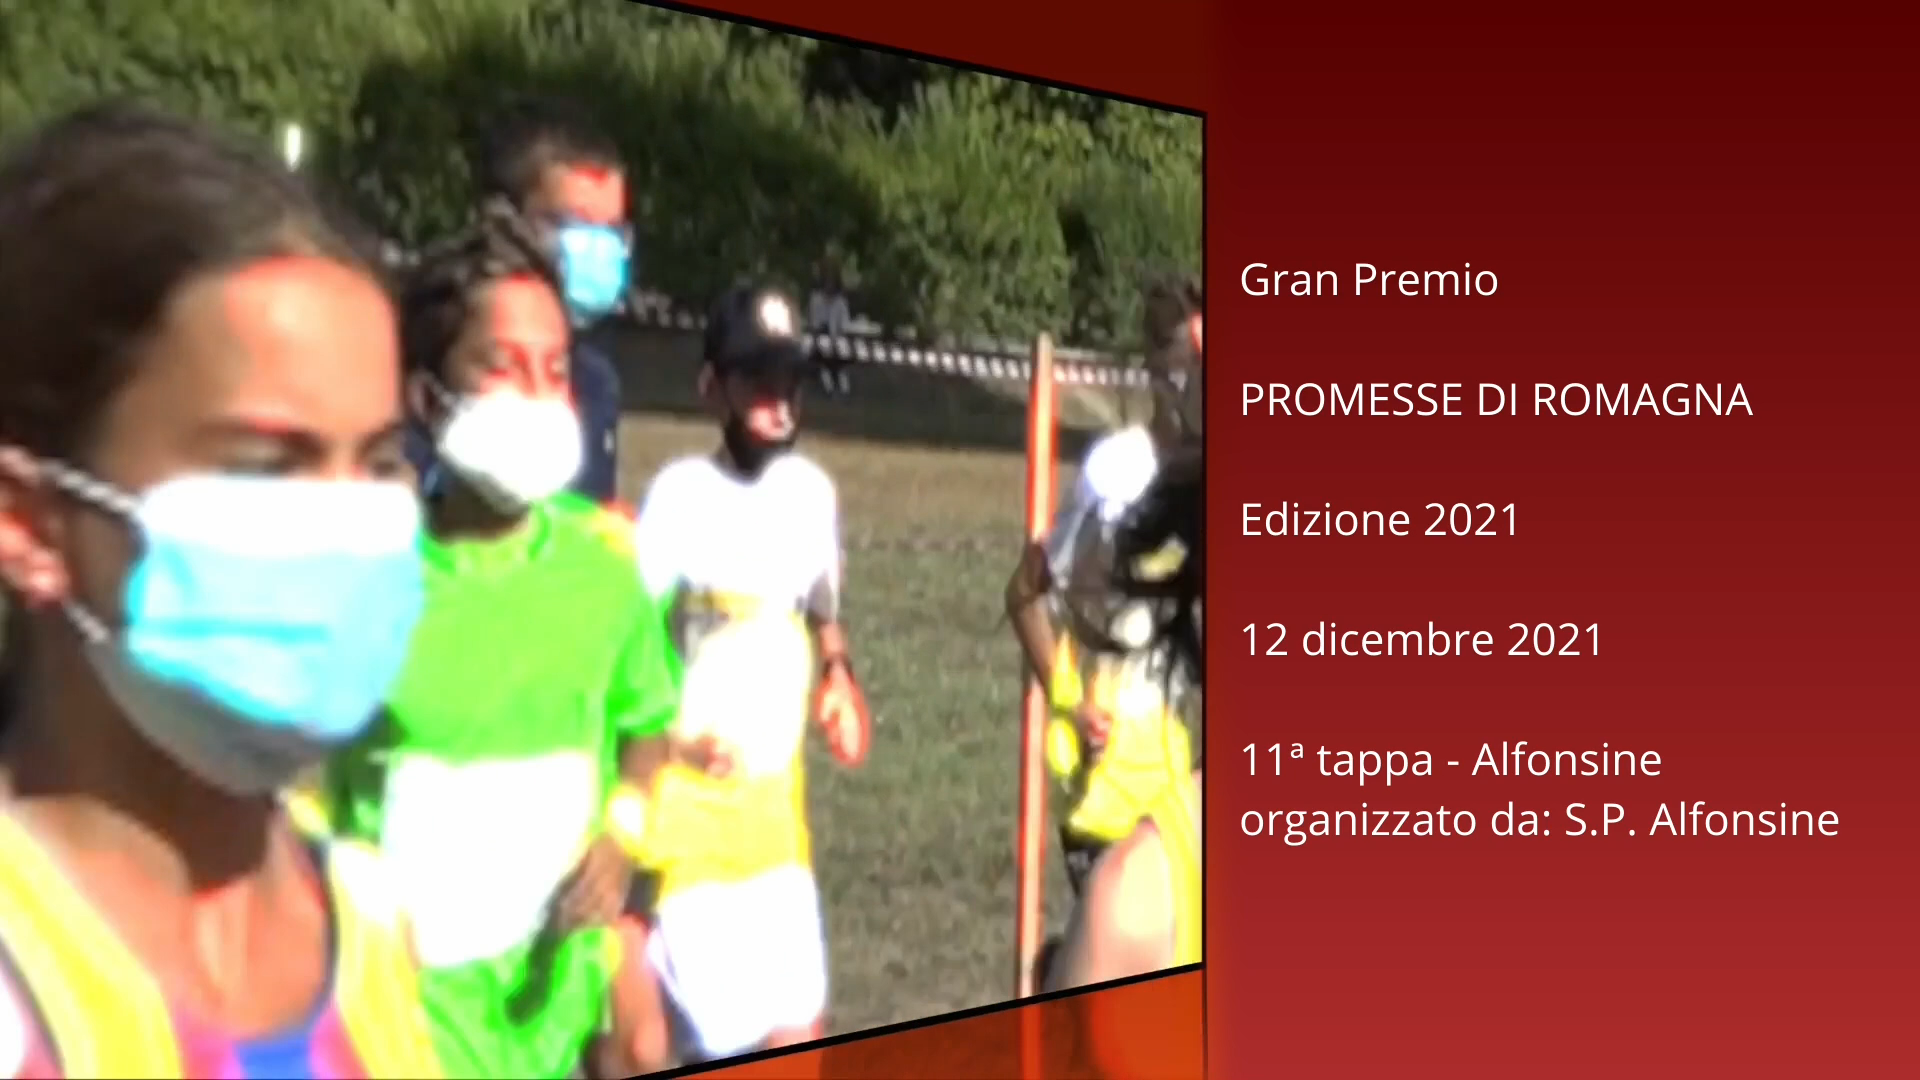 Gran Premio PROMESSE DI ROMAGNA 2021:  11a Tappa organizzata da S.P. Alfonsine